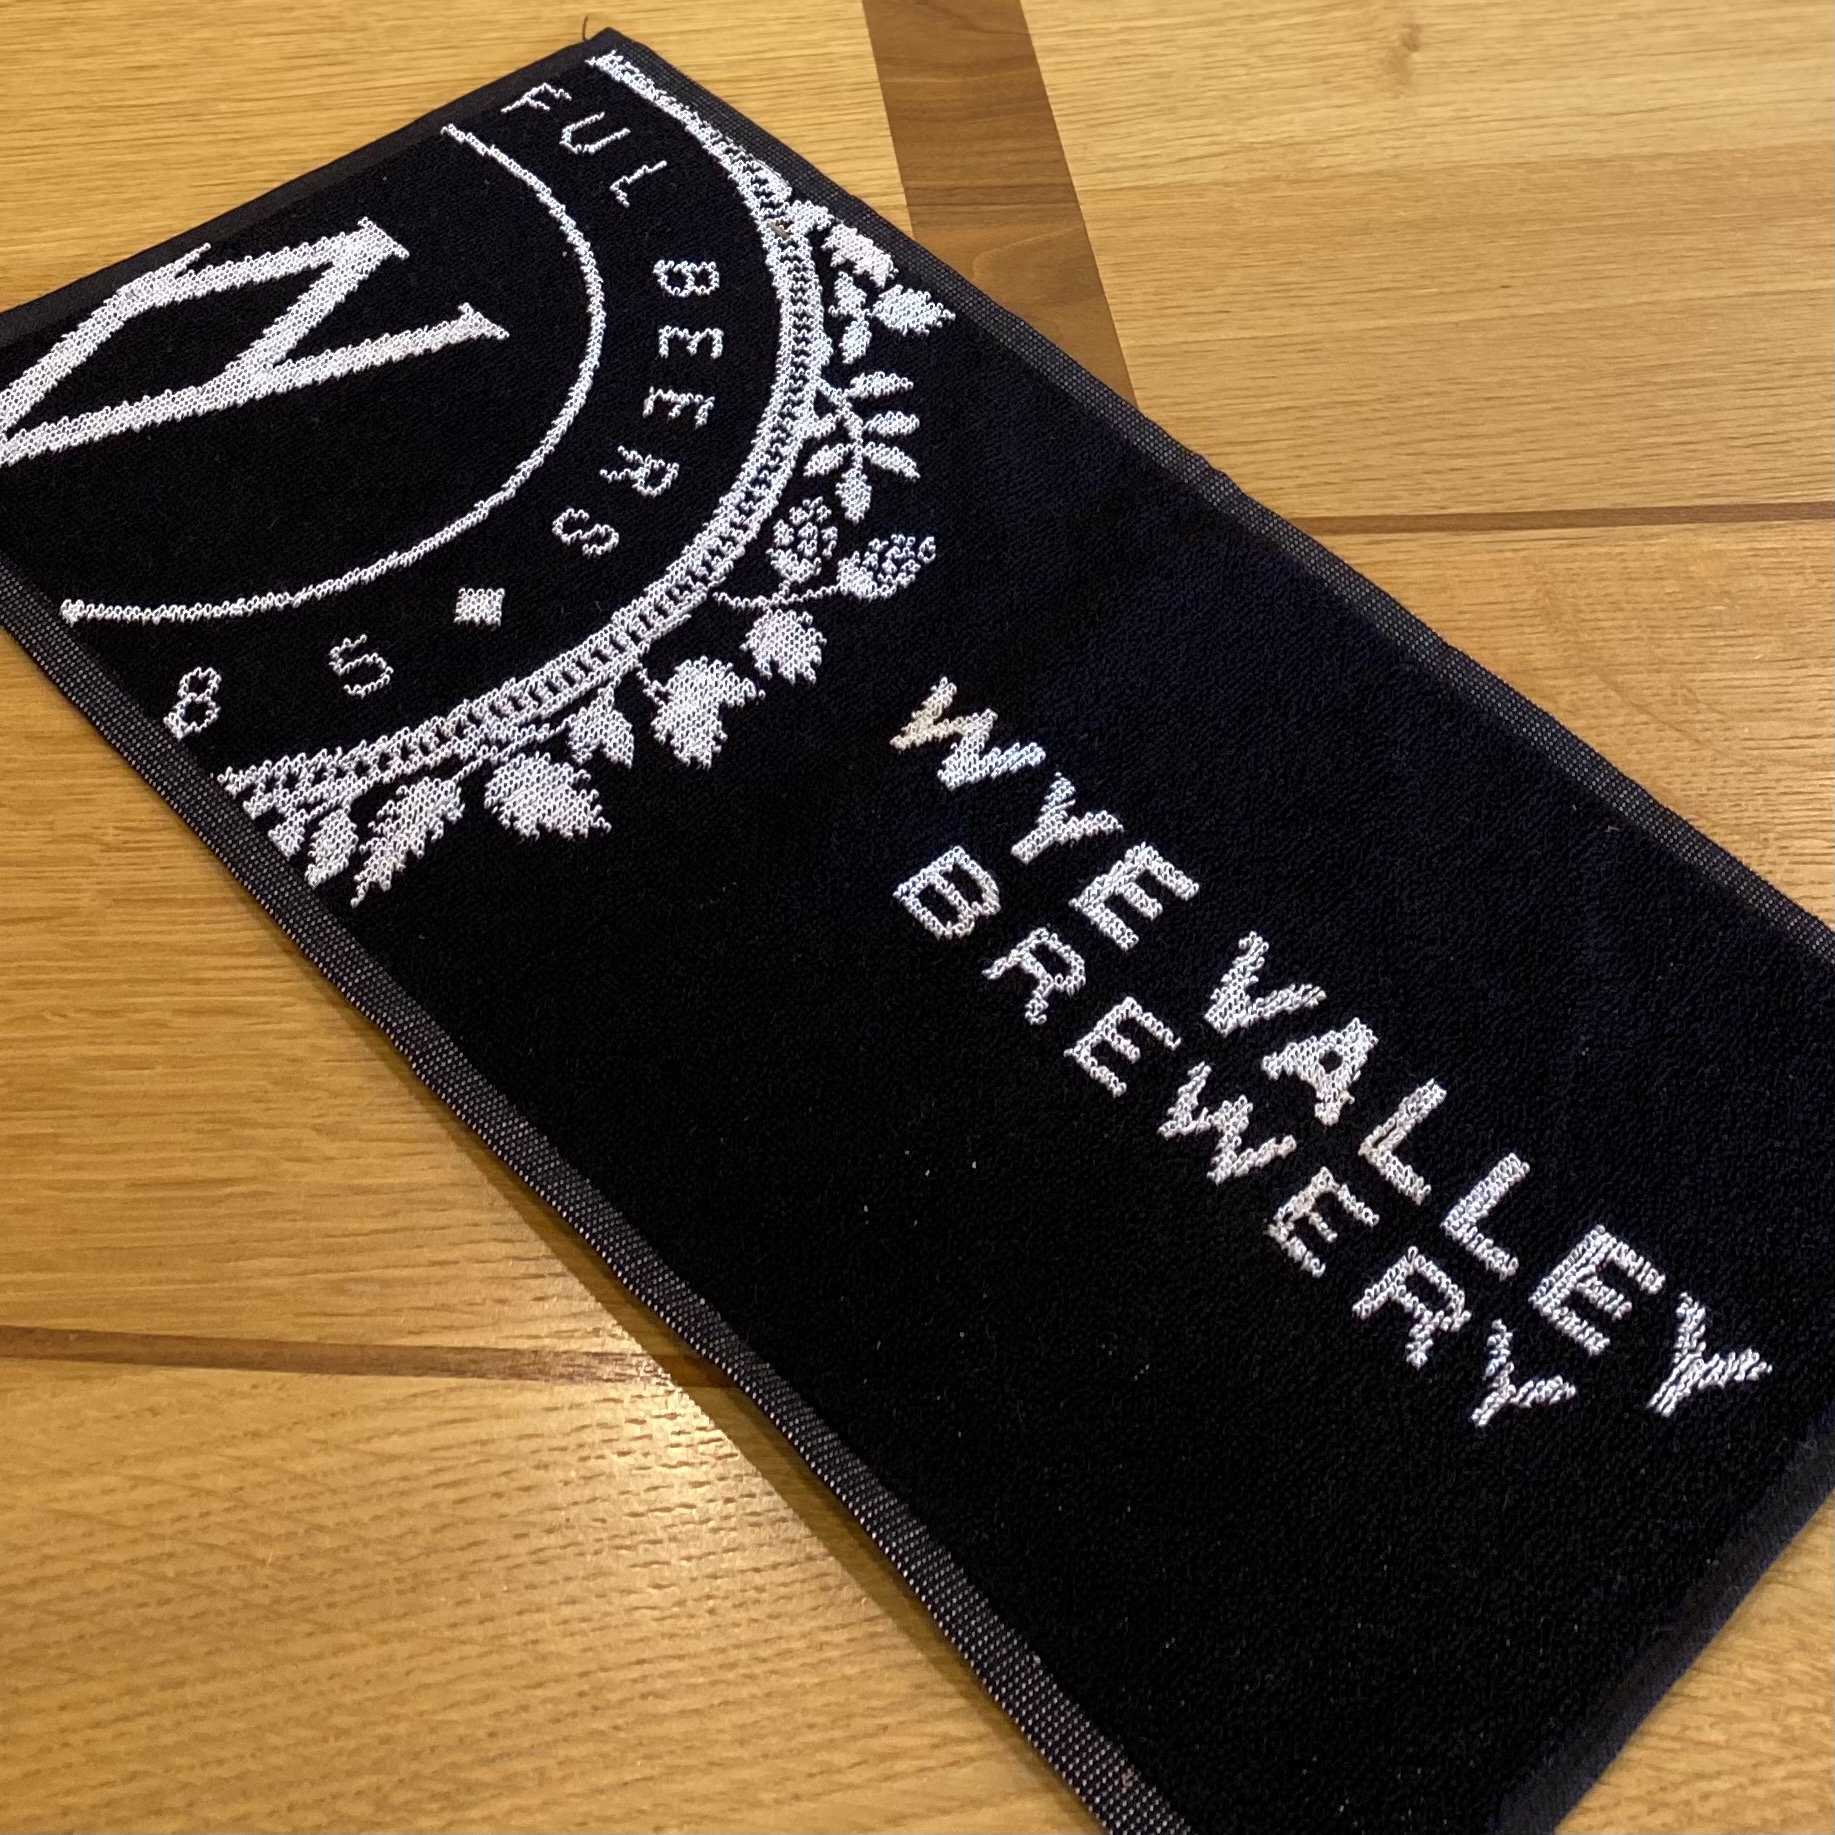 Wye Valley Brewery Beer Bar Towel Pub Home Bar Man Cave New Unused 